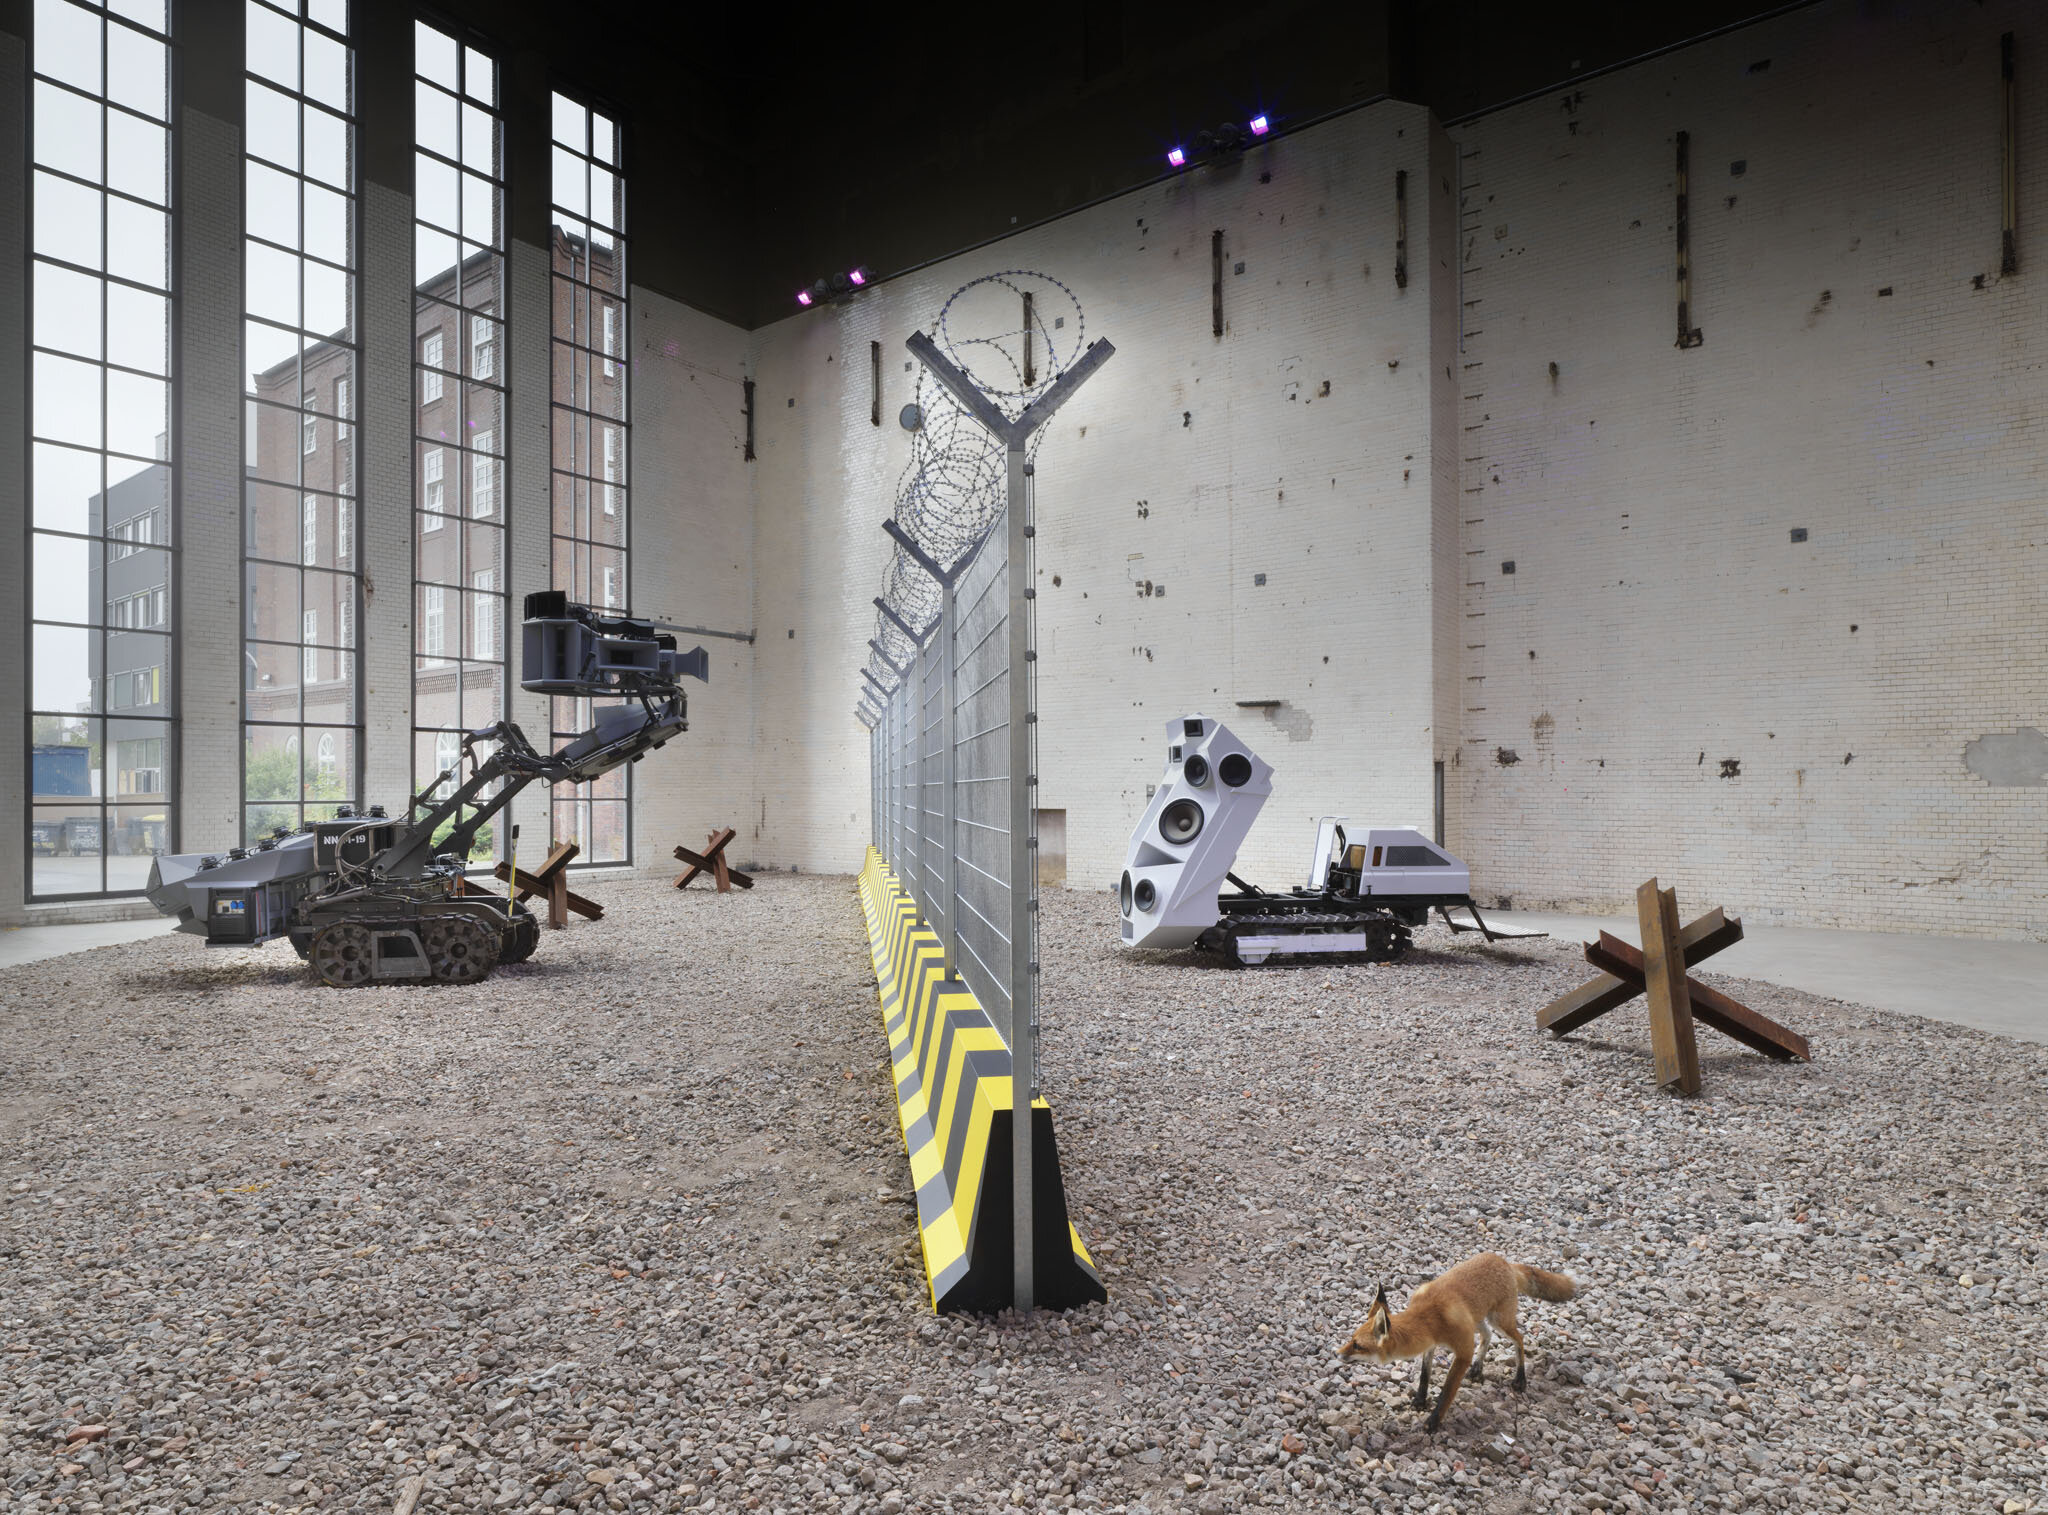   Nik Nowak. Schizo Sonics,  2020, exhibition view, Kesselhaus, KINDL, © Nik Nowak / VG Bild-Kunst, Bonn, 2020, photo: Jens Ziehe 